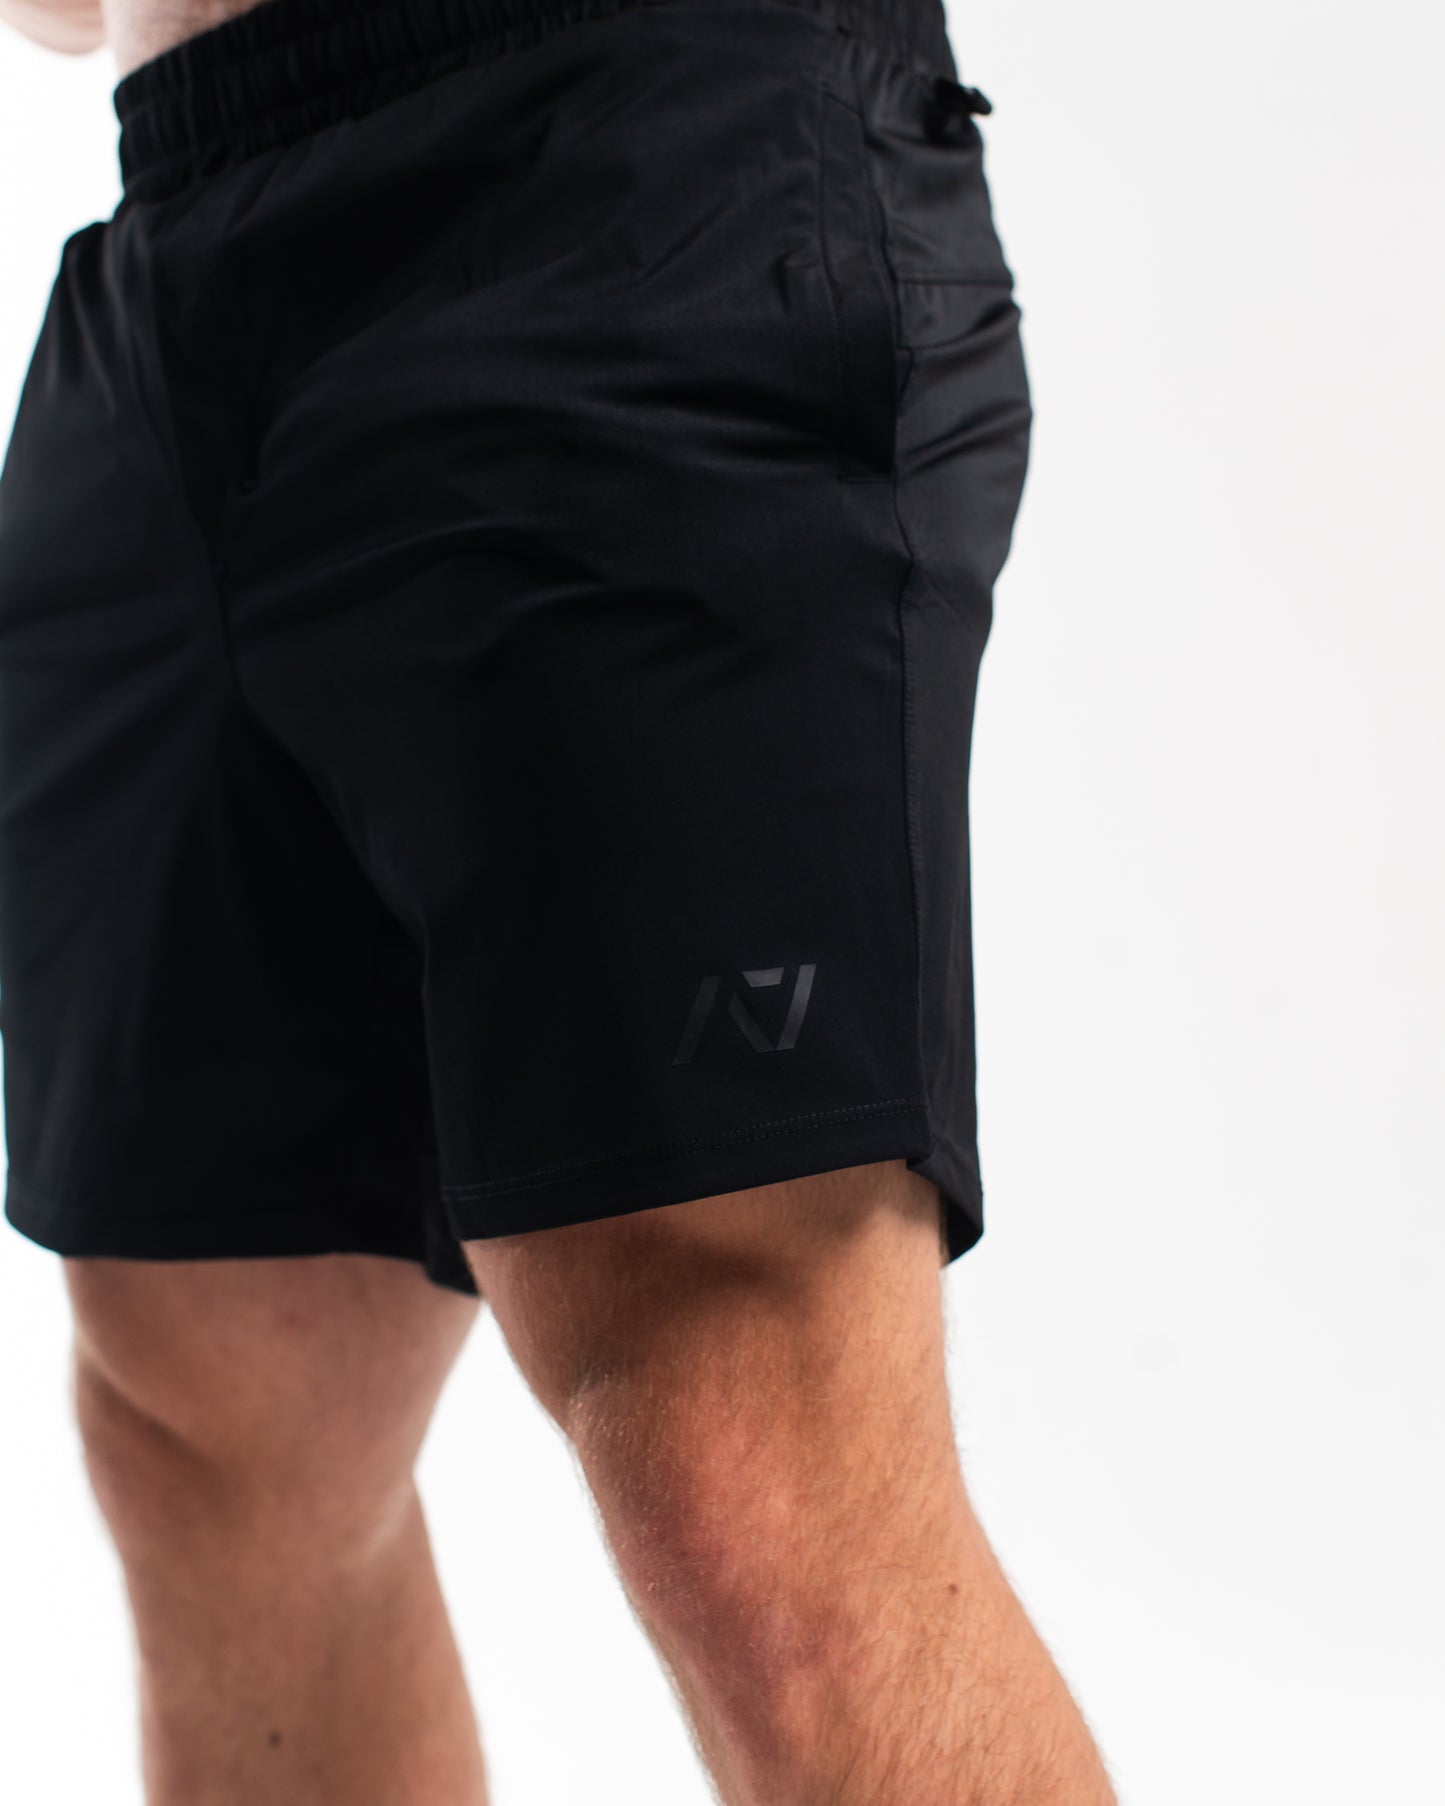 
                  
                    360Go 1Z Shorts - Stealth
                  
                